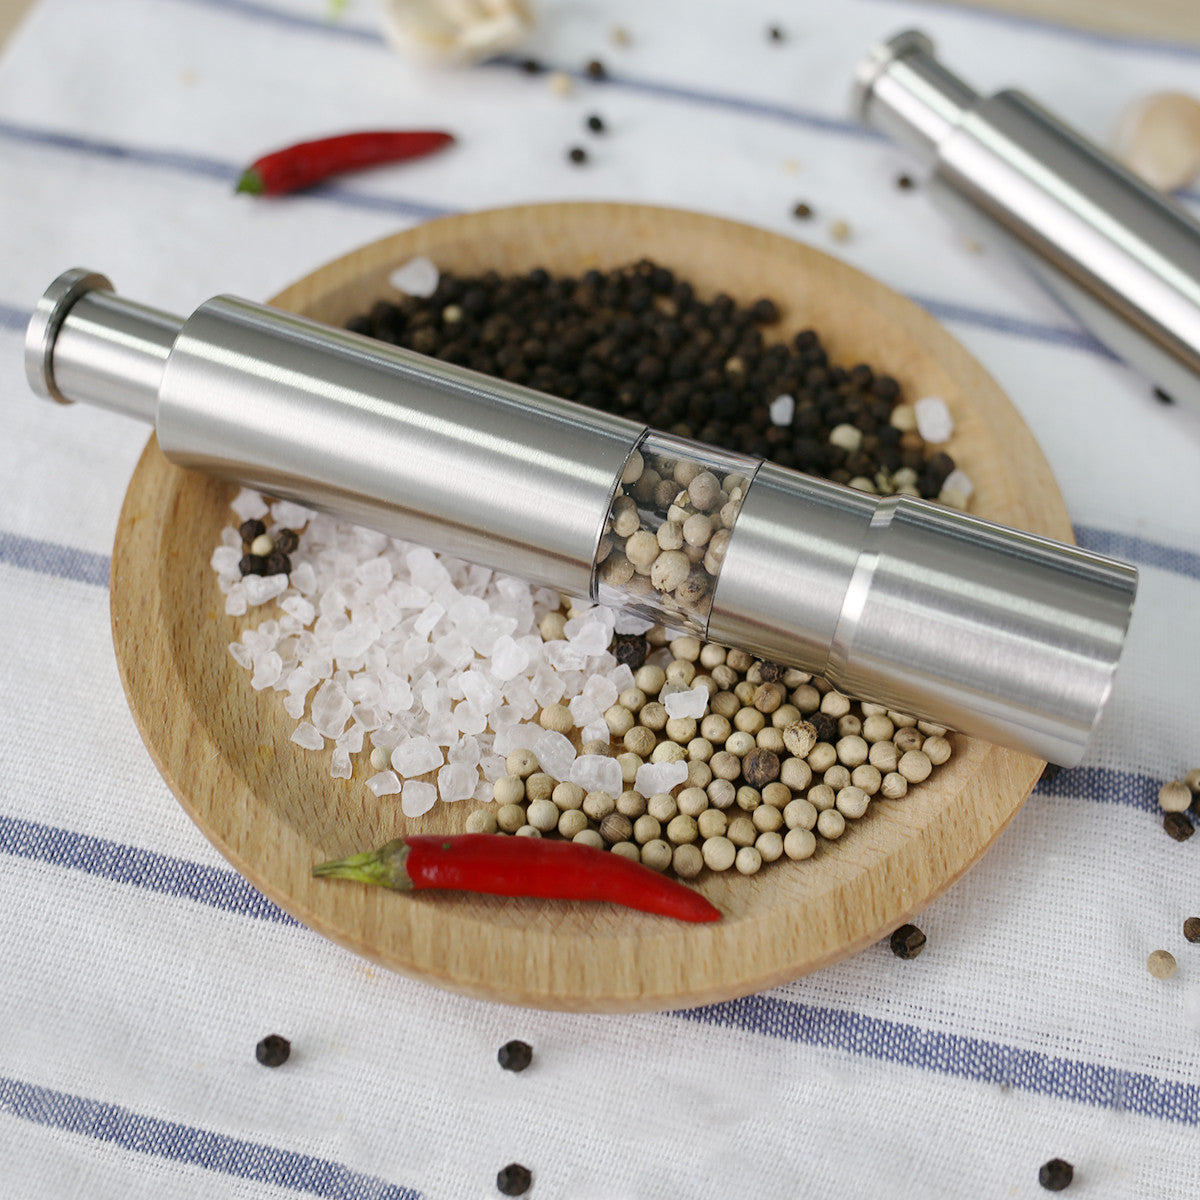 Stainless Steel Salt and Pepper Grinders + Reviews